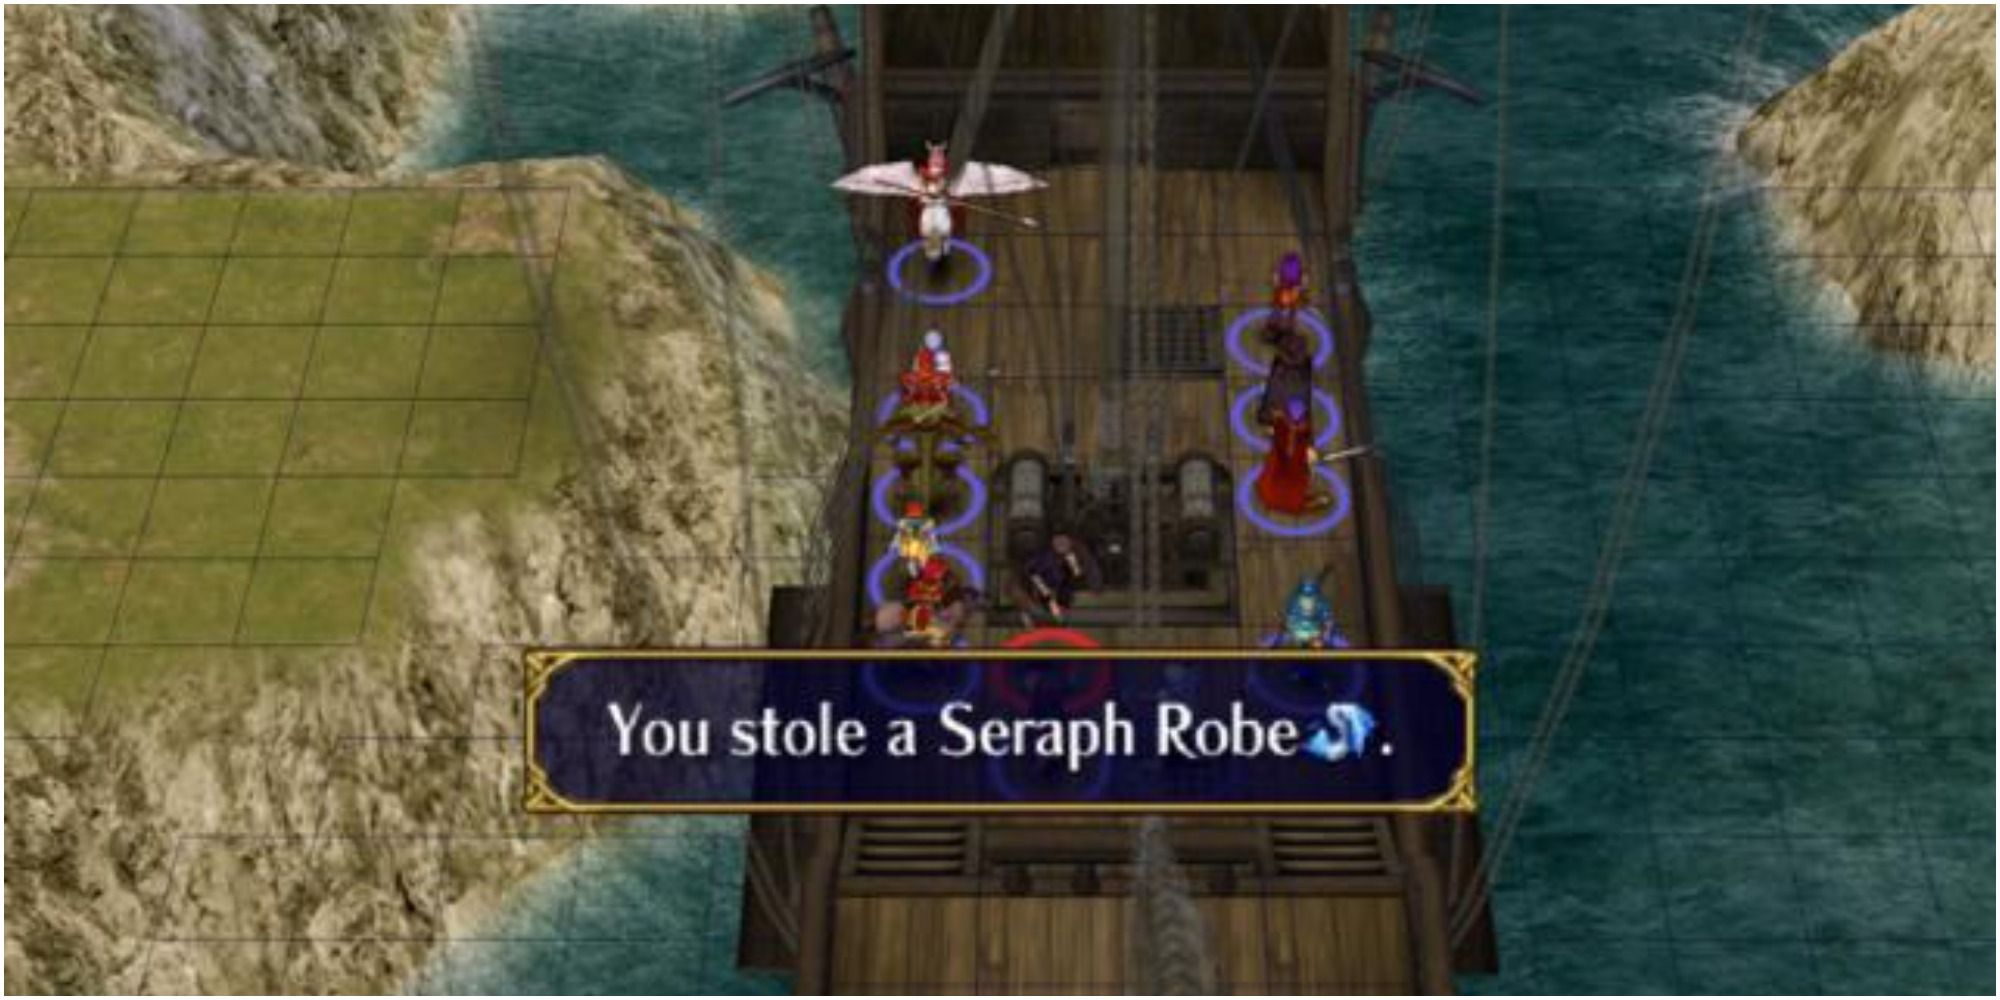 seraph robe fire emblem screenshot on boat by rocks